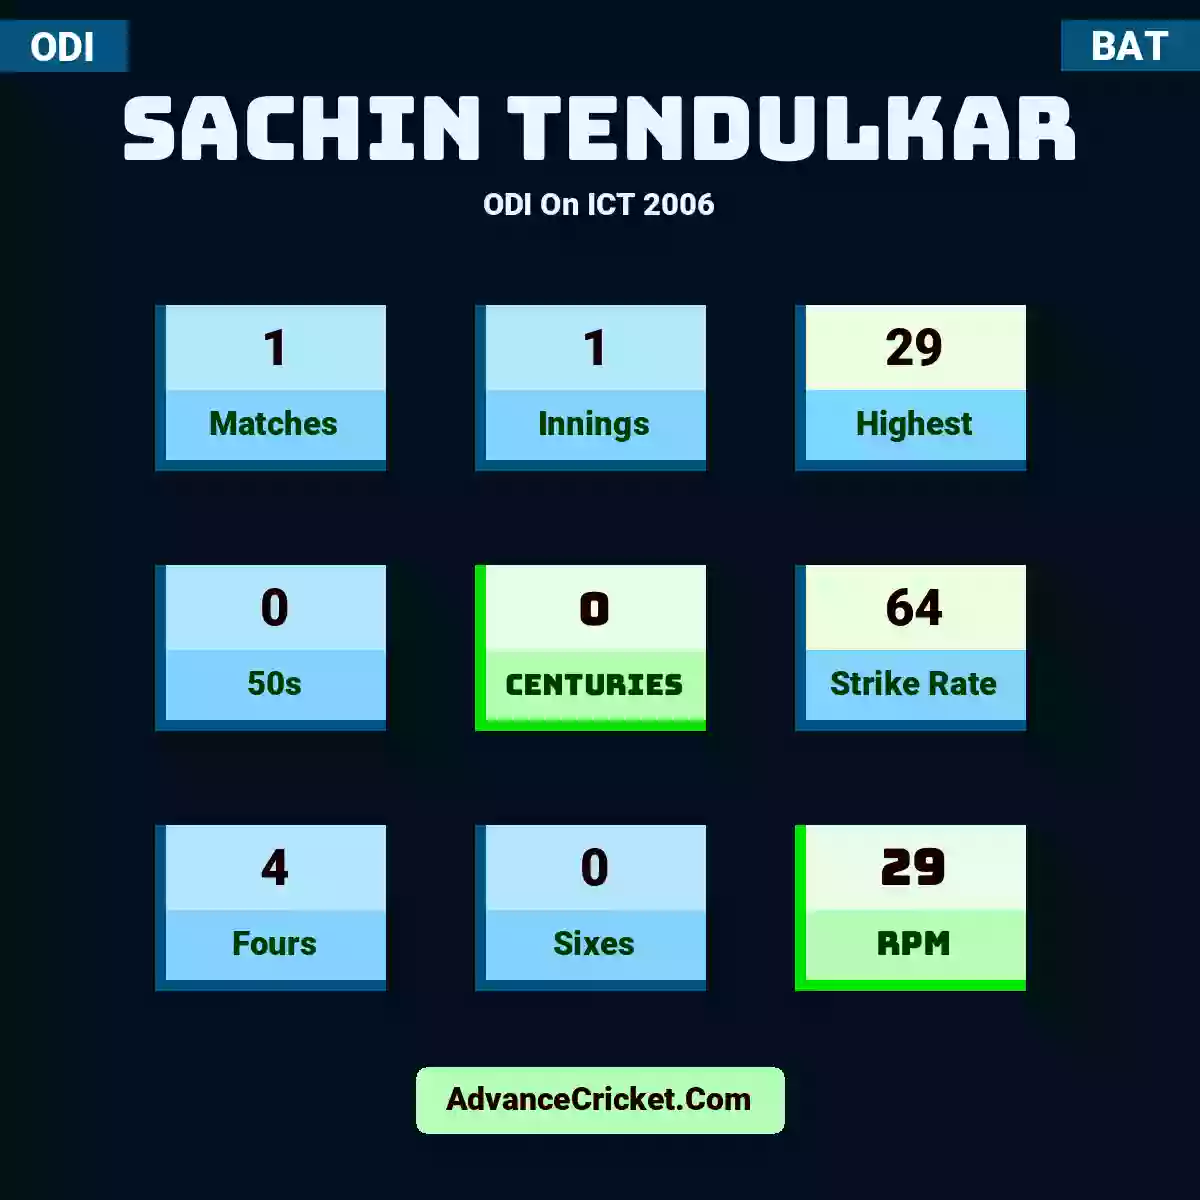 Sachin Tendulkar ODI  On ICT 2006, Sachin Tendulkar played 1 matches, scored 29 runs as highest, 0 half-centuries, and 0 centuries, with a strike rate of 64. S.Tendulkar hit 4 fours and 0 sixes, with an RPM of 29.